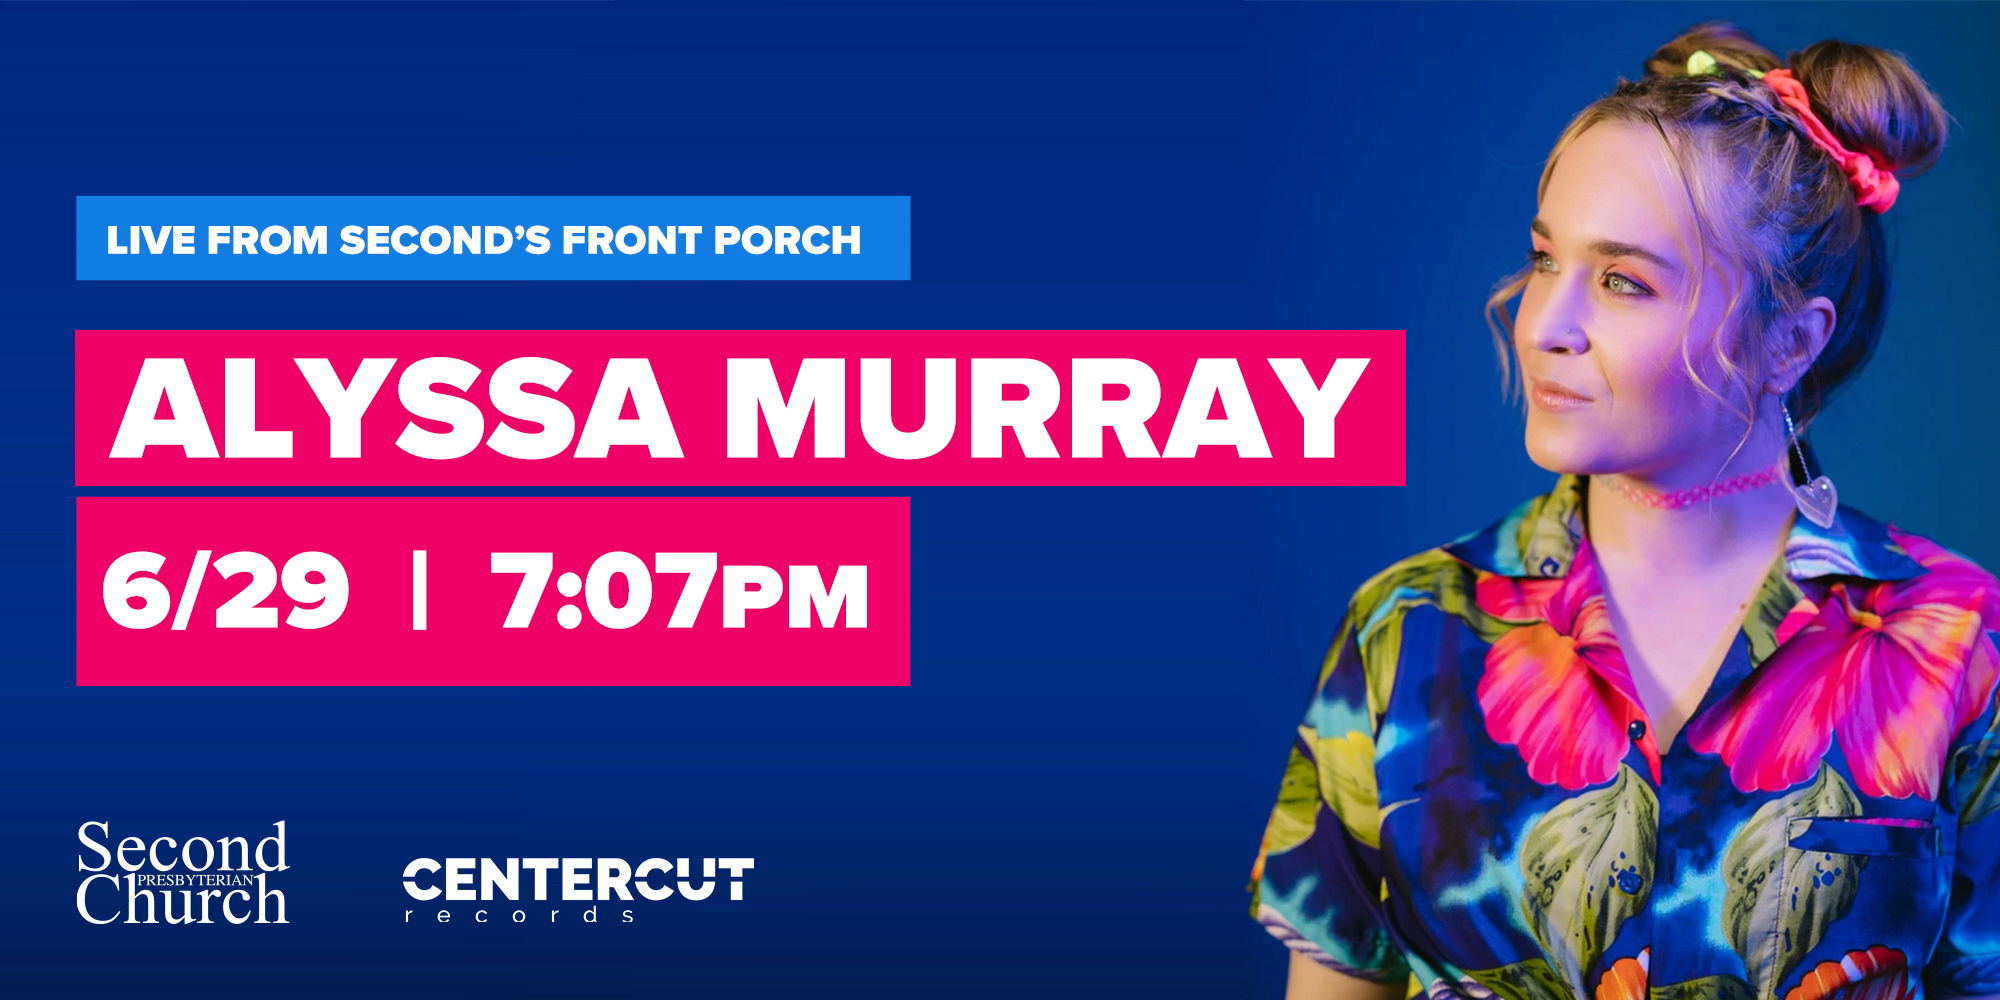 Alyssa Murray - 7:07 Front Porch Concert promotional image